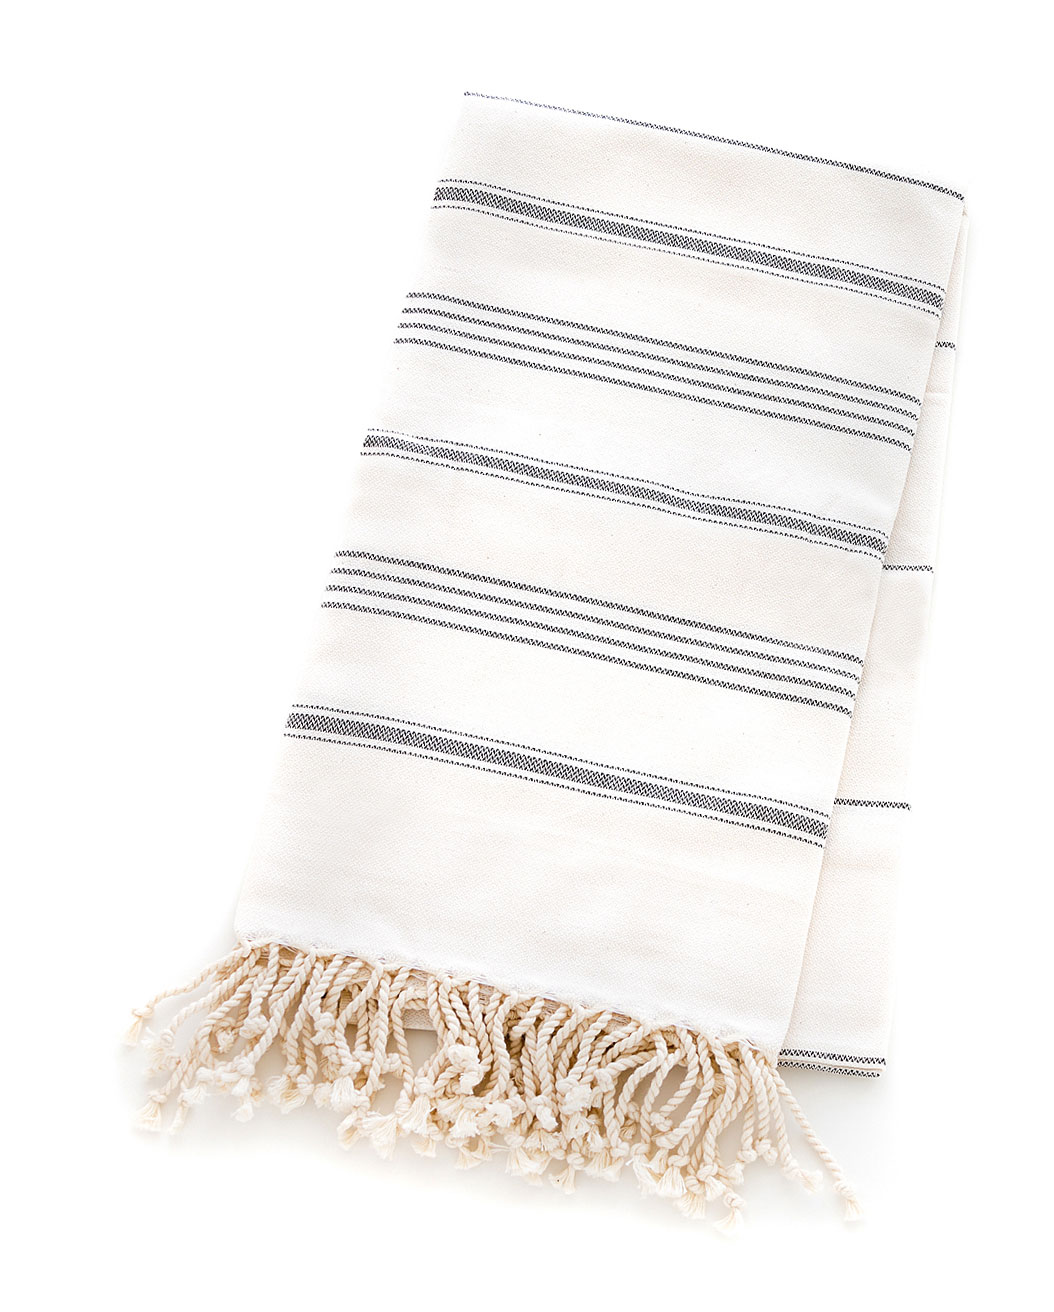 Michelle Silver Stripe Turkish Towel from Pamuk #turkishtowel #stripes #bathtowel